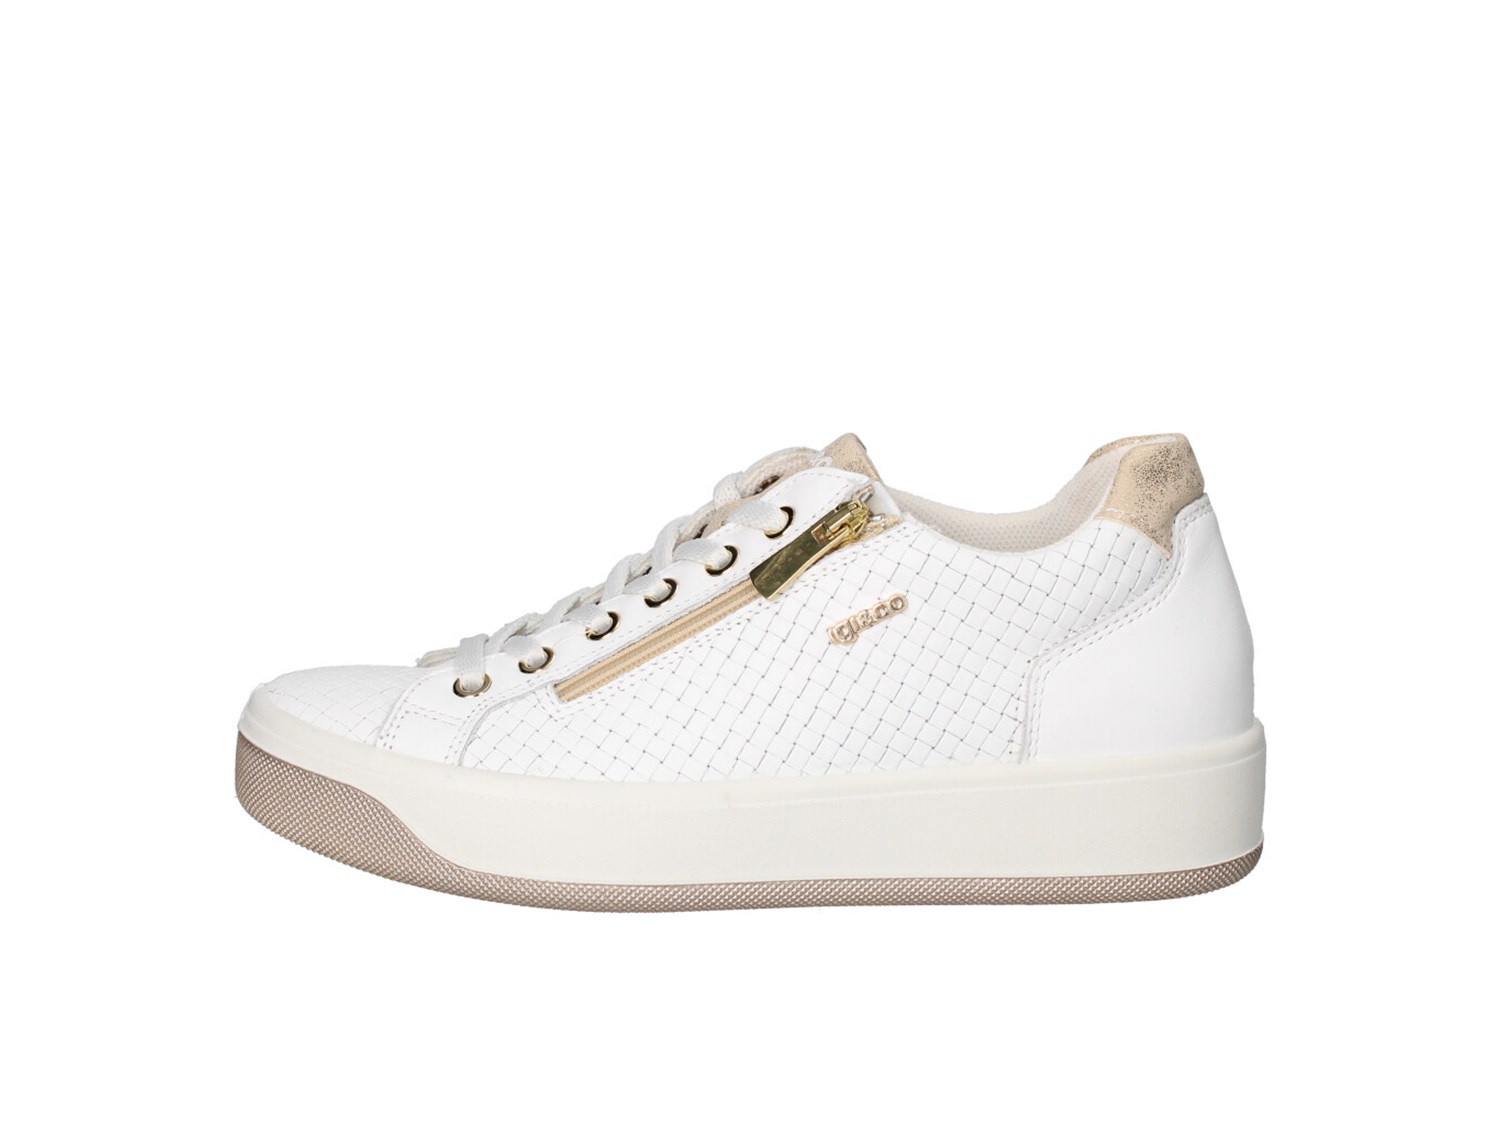 Igi&co 5658100 Bianco Scarpe Donna Sneakers